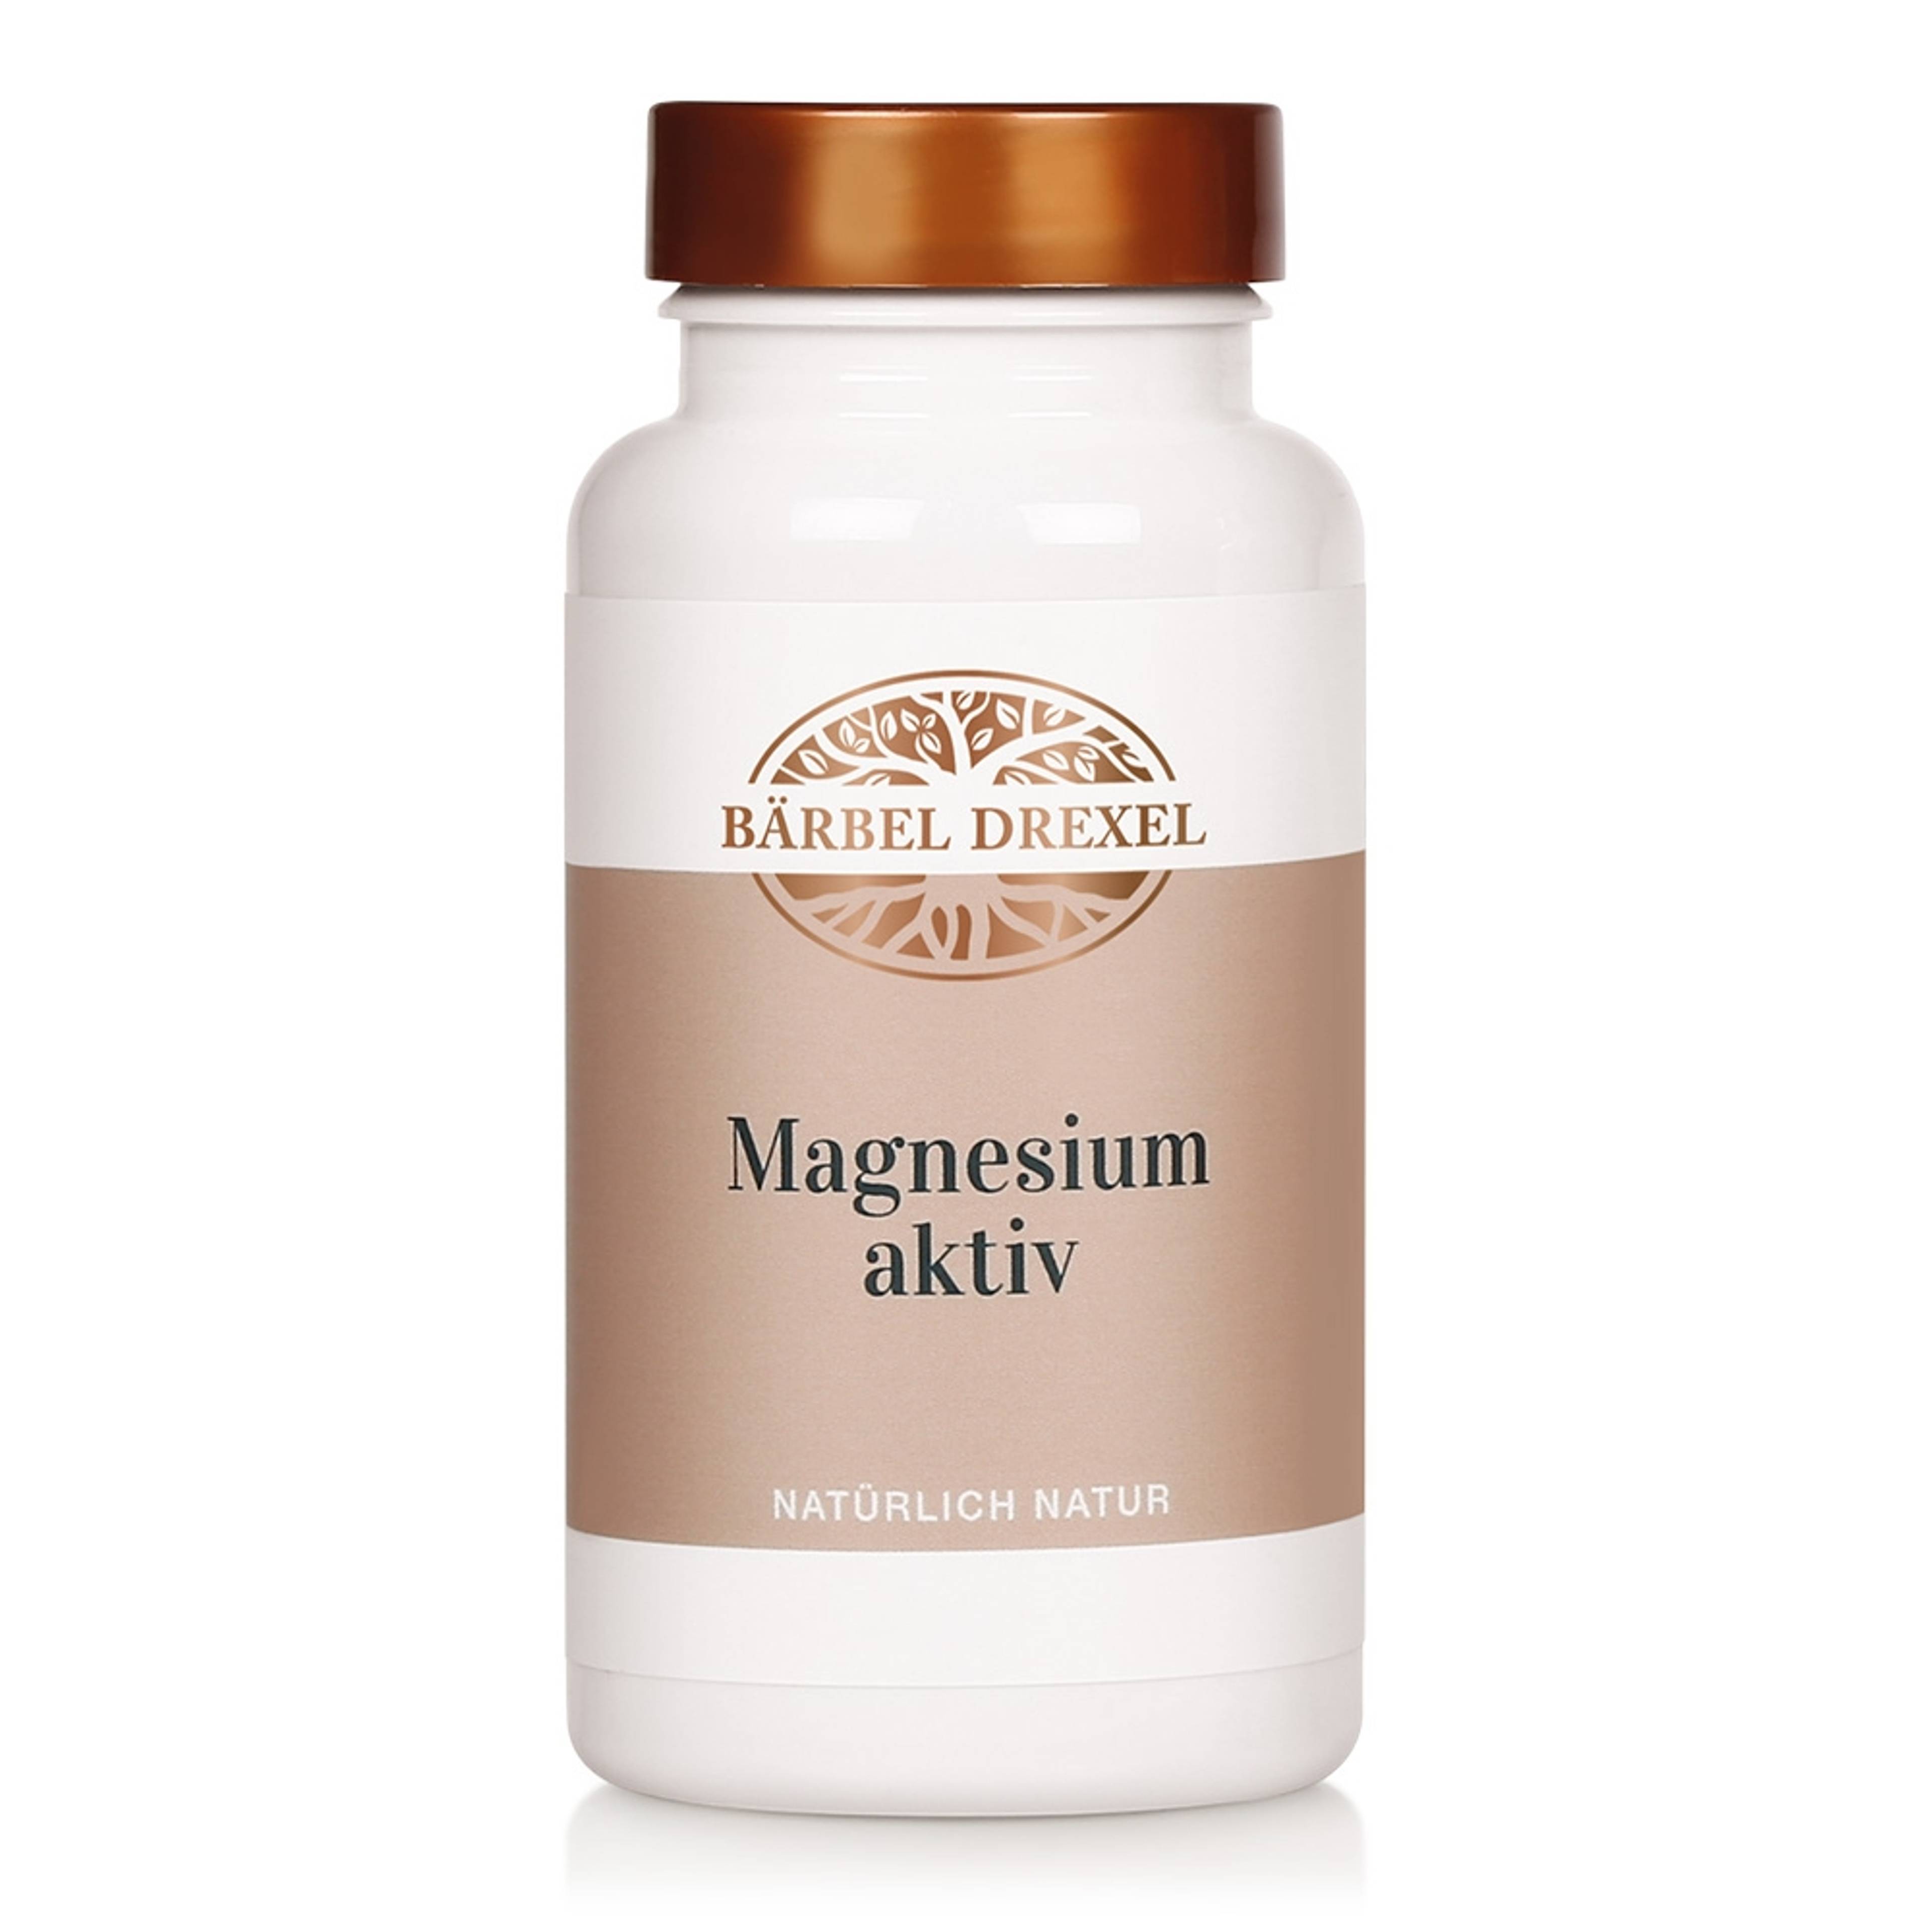 Magnesium aktiv Presslinge mit Depot-Wirkung